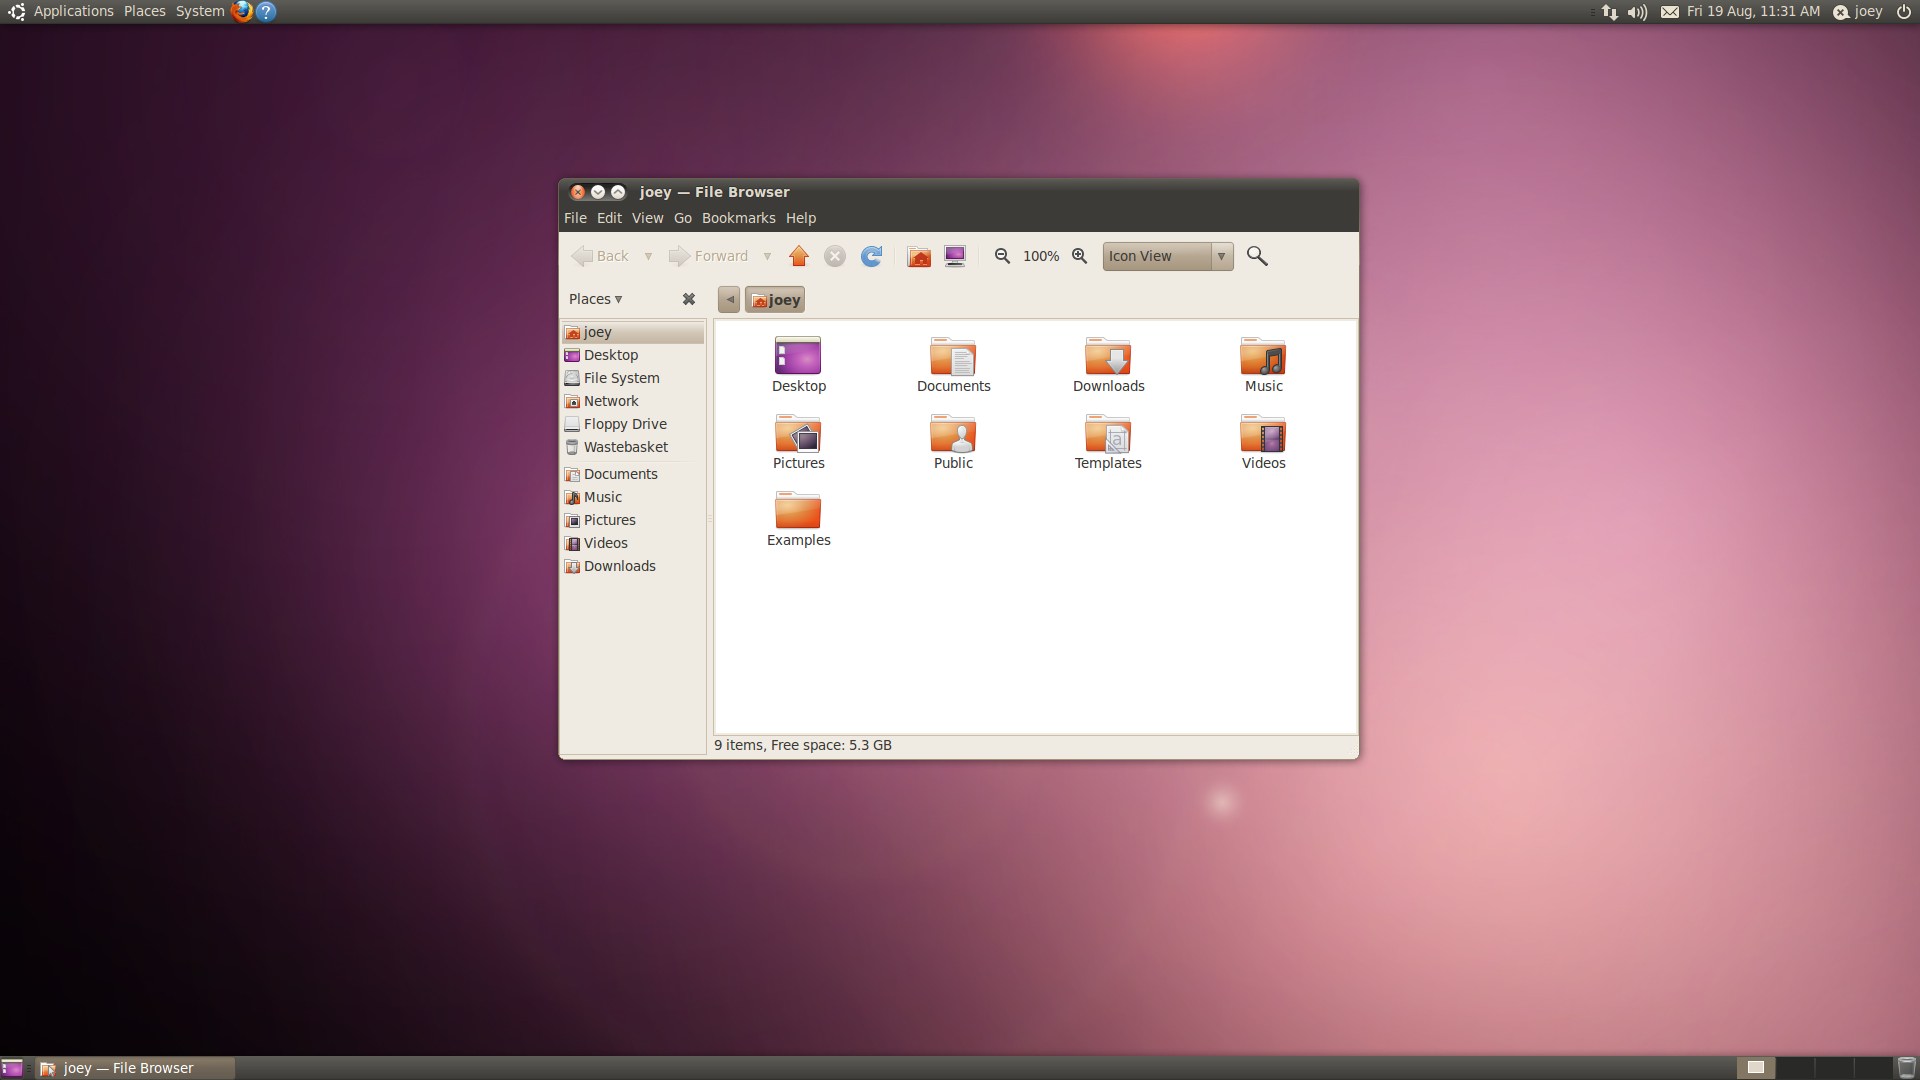  Ubuntu 10.04.4